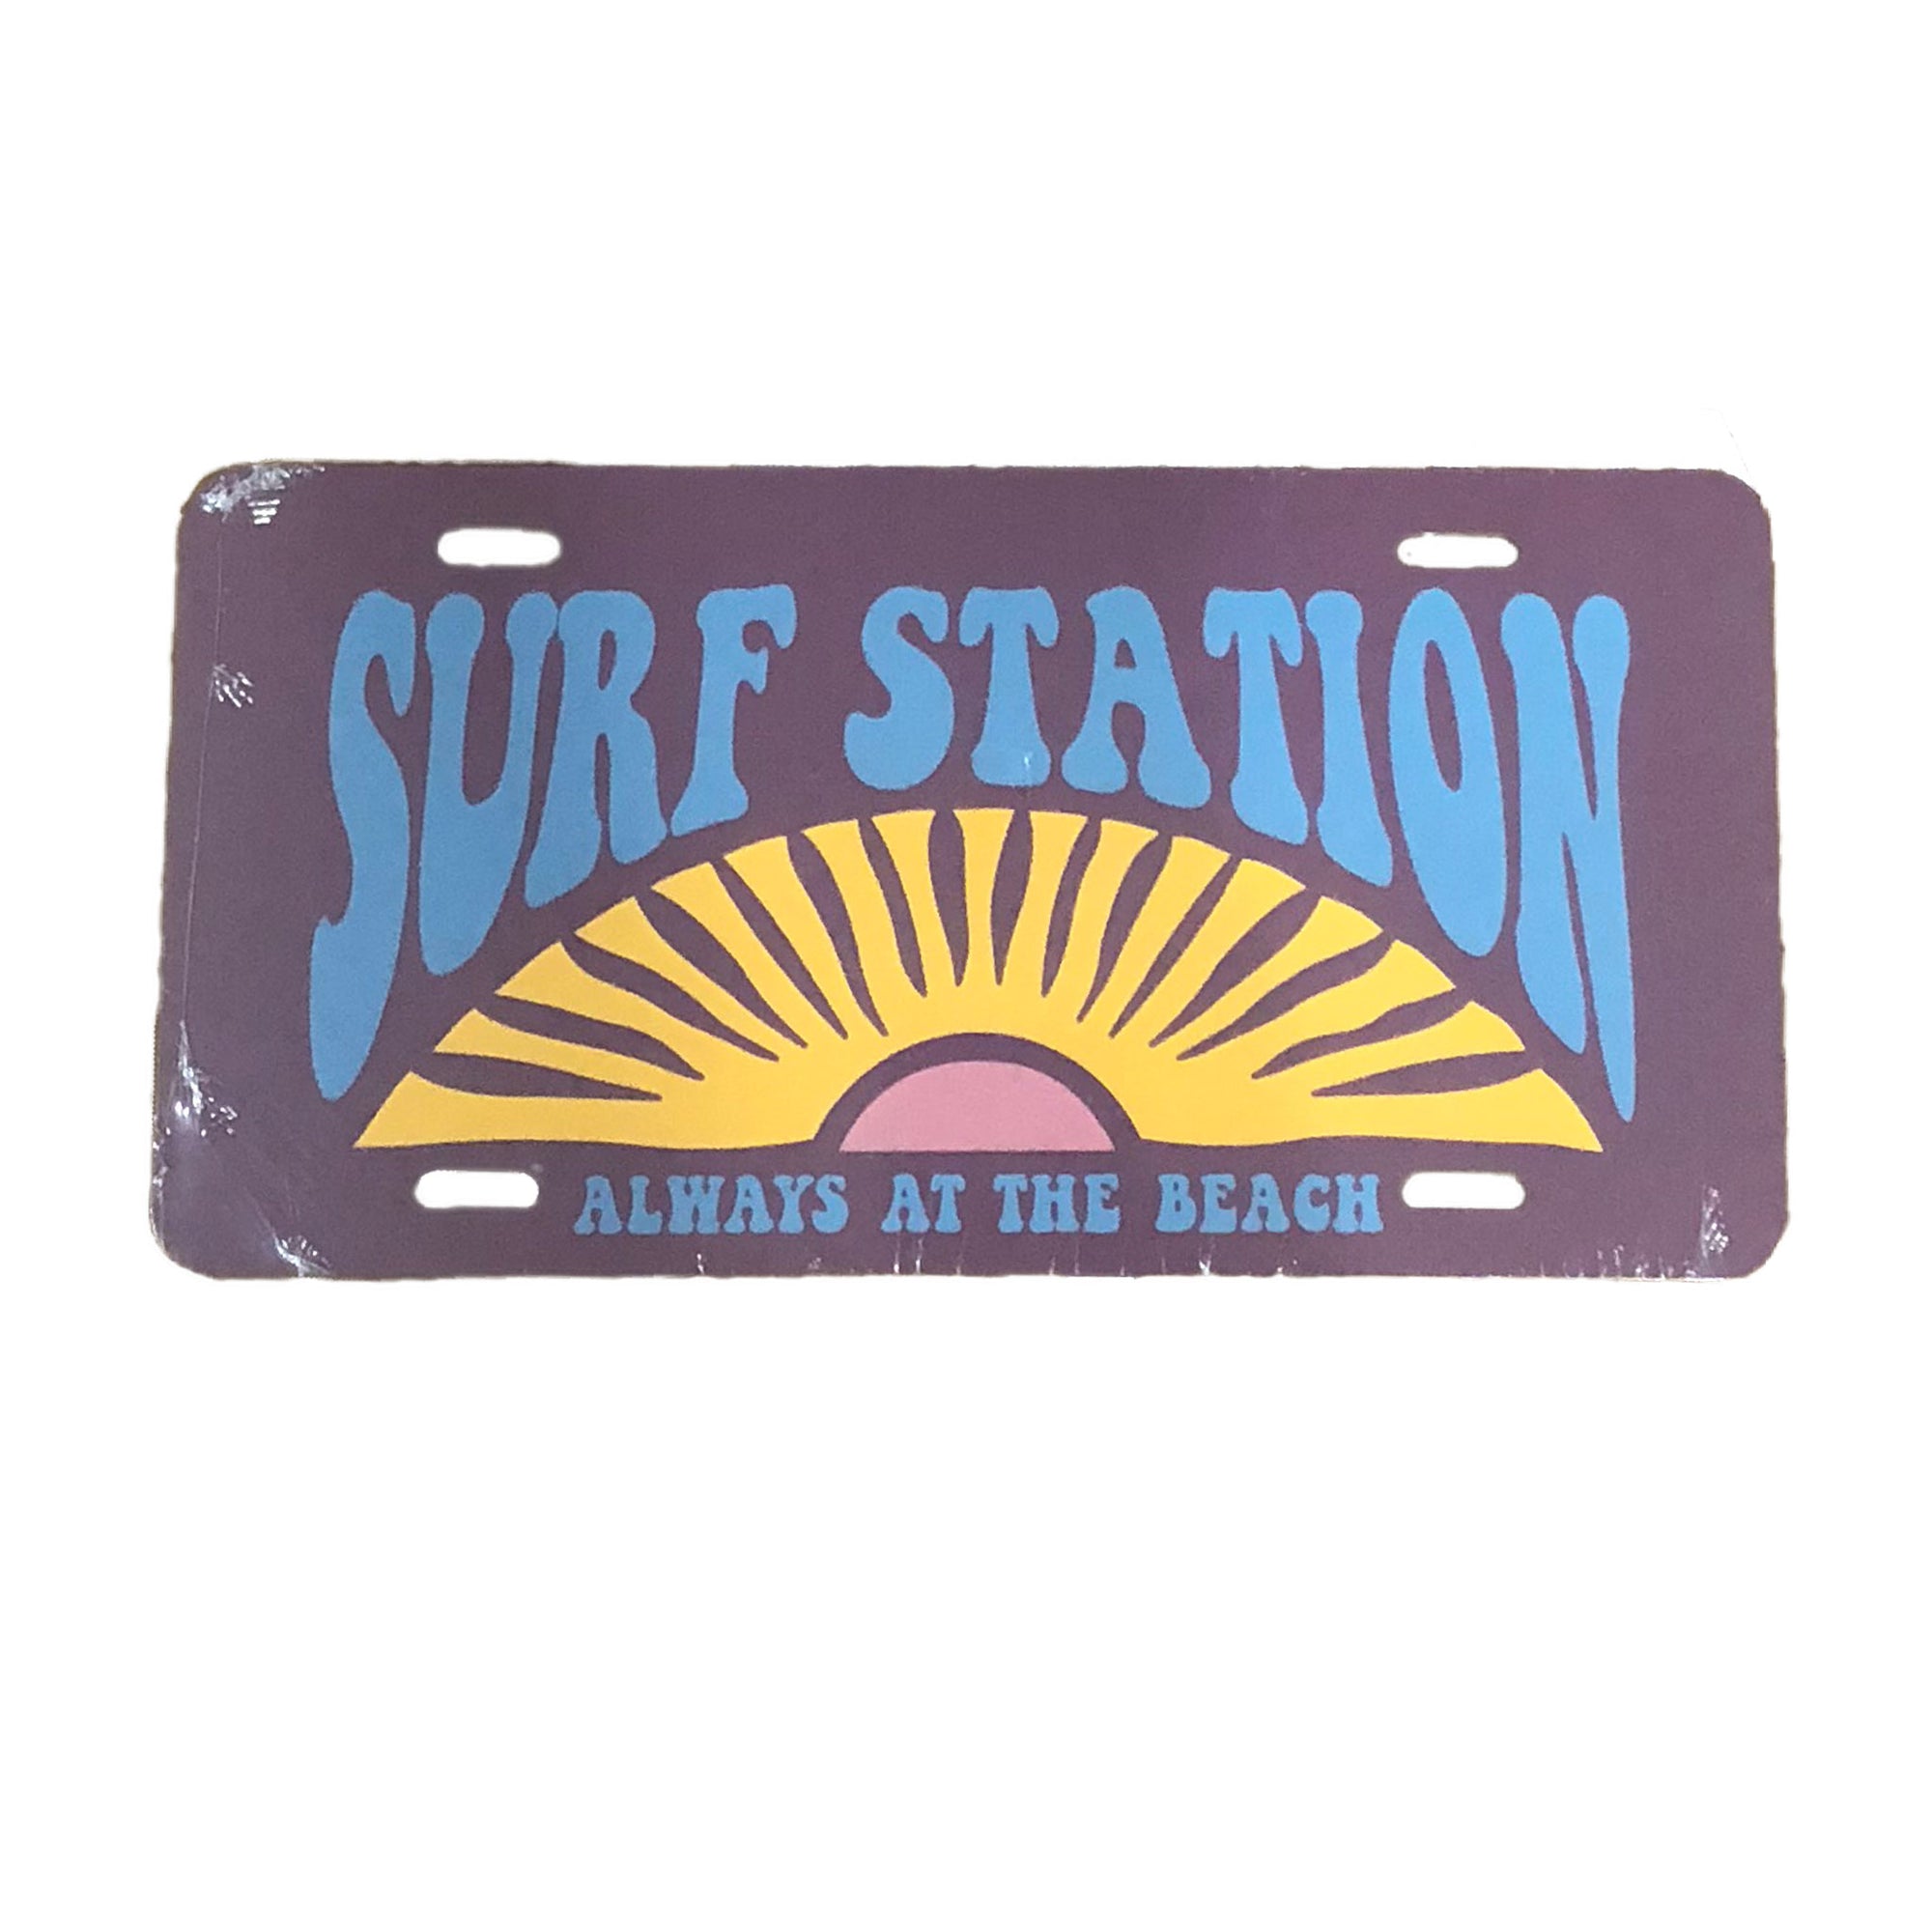 Surf Station License Plate